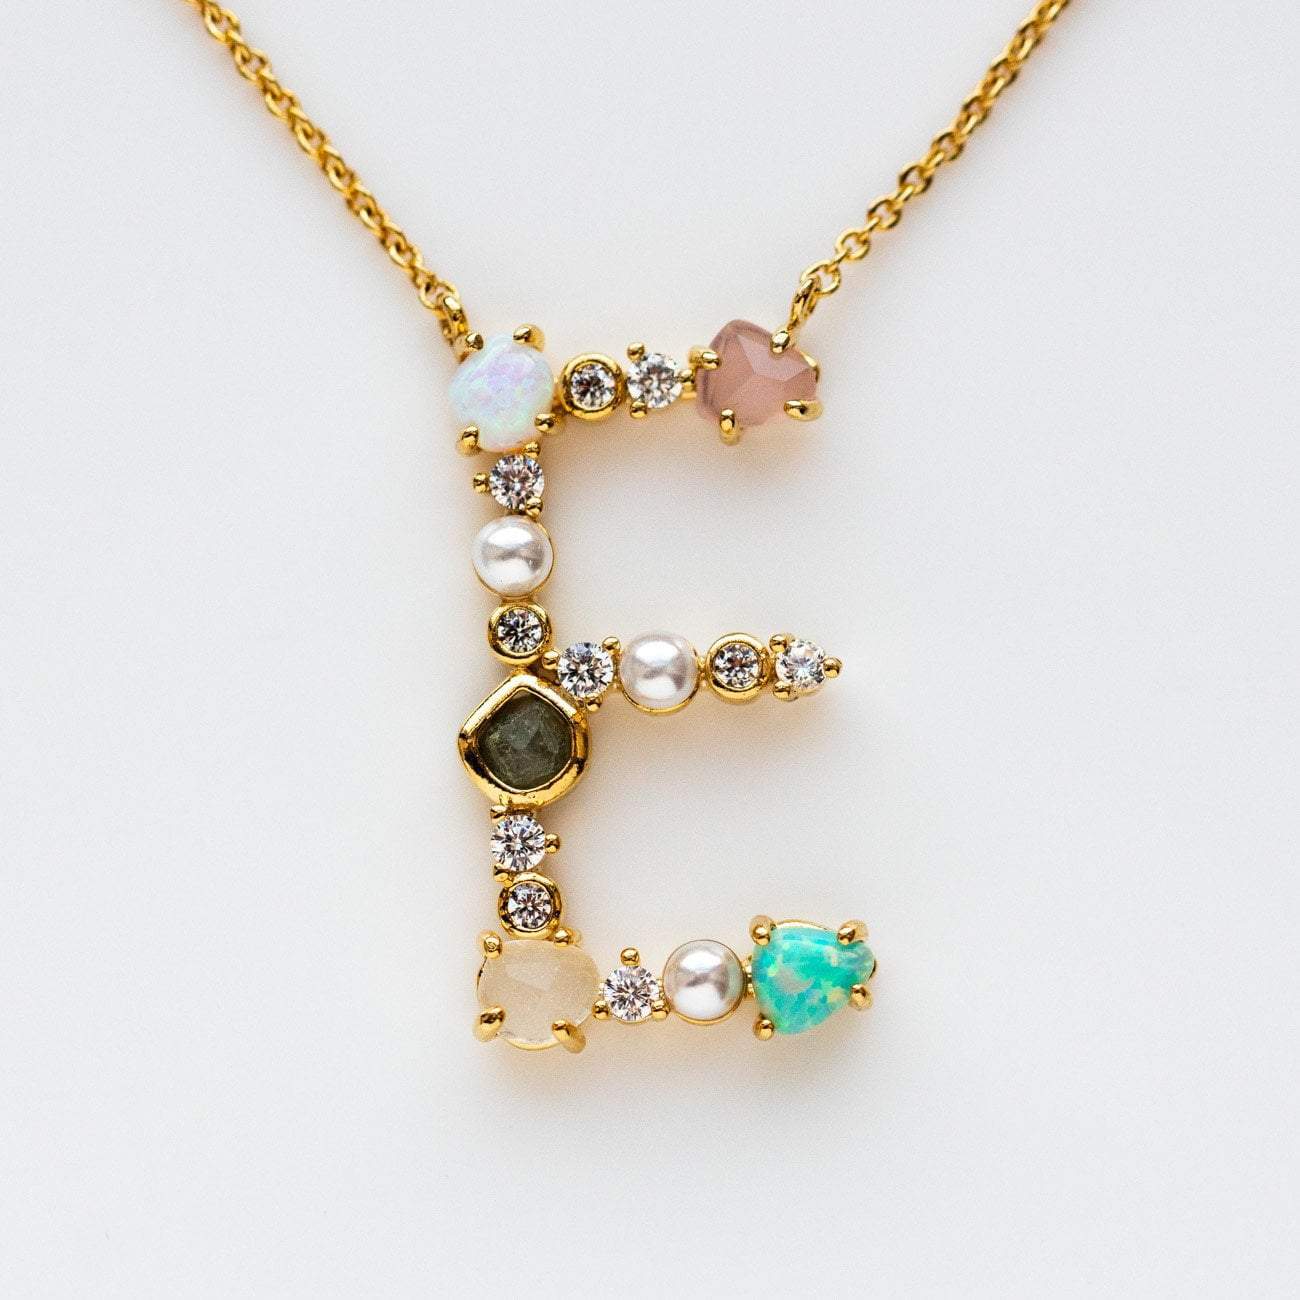 e initial stone monogram pendant necklace statement personalized jewelry